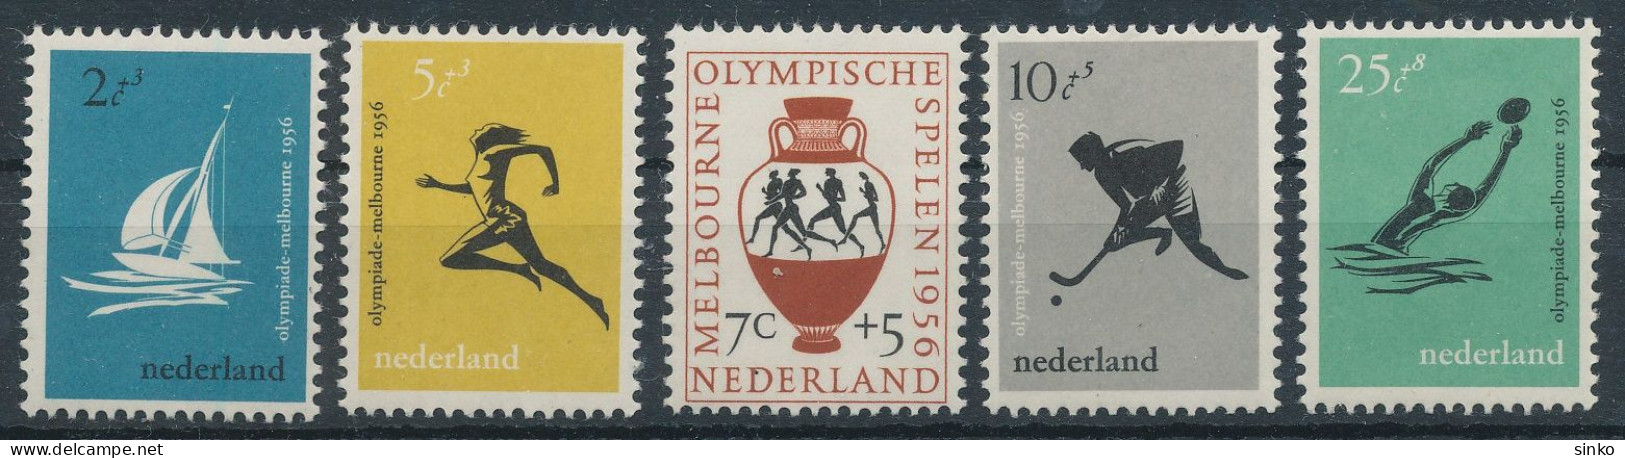 1956. Netherlands - Olympics - Summer 1956: Melbourne